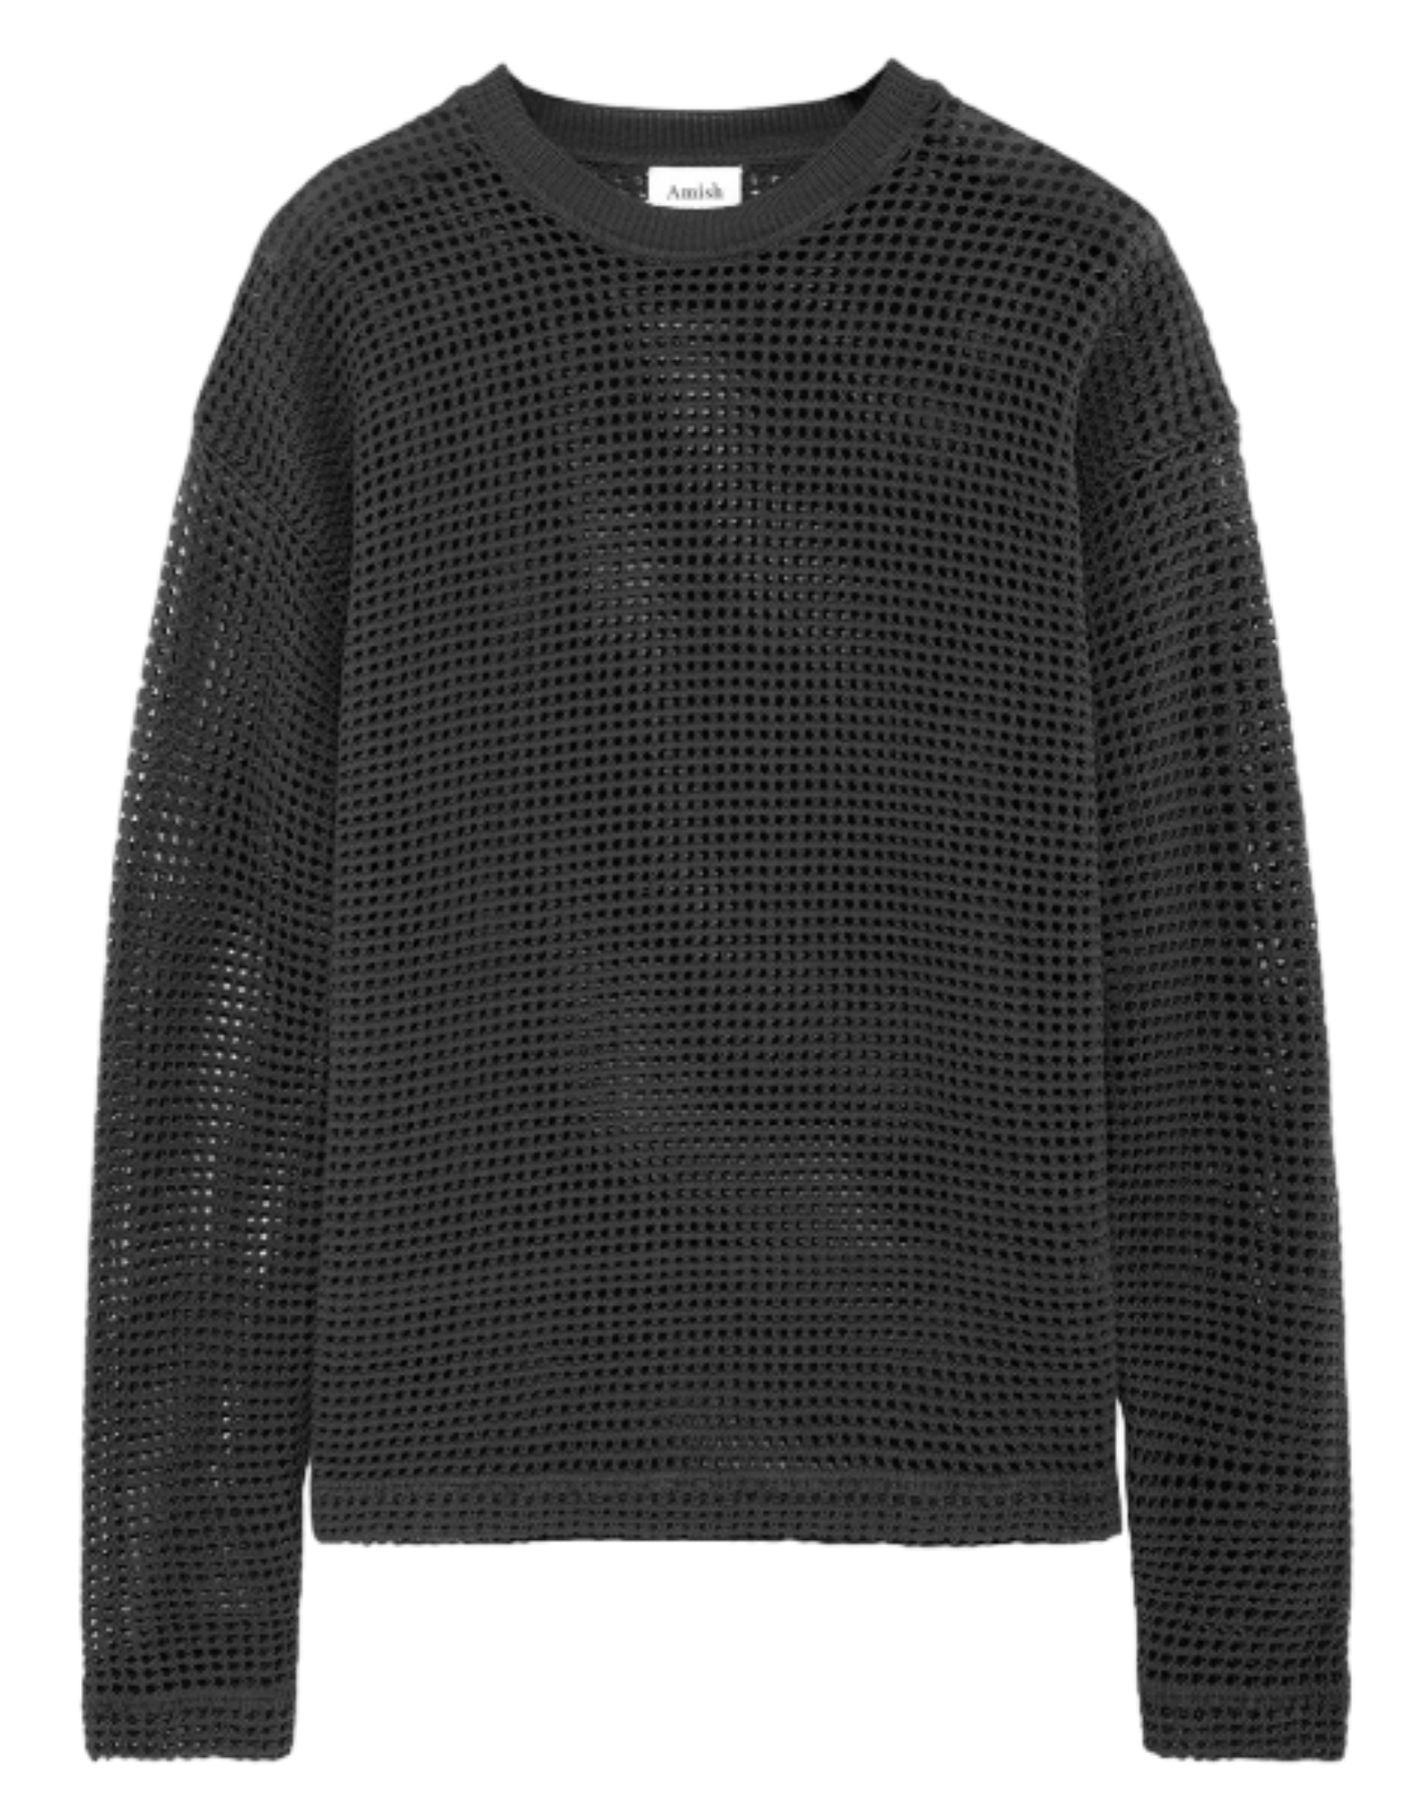 Sweater femme amu045cg46xxxx noir Amish